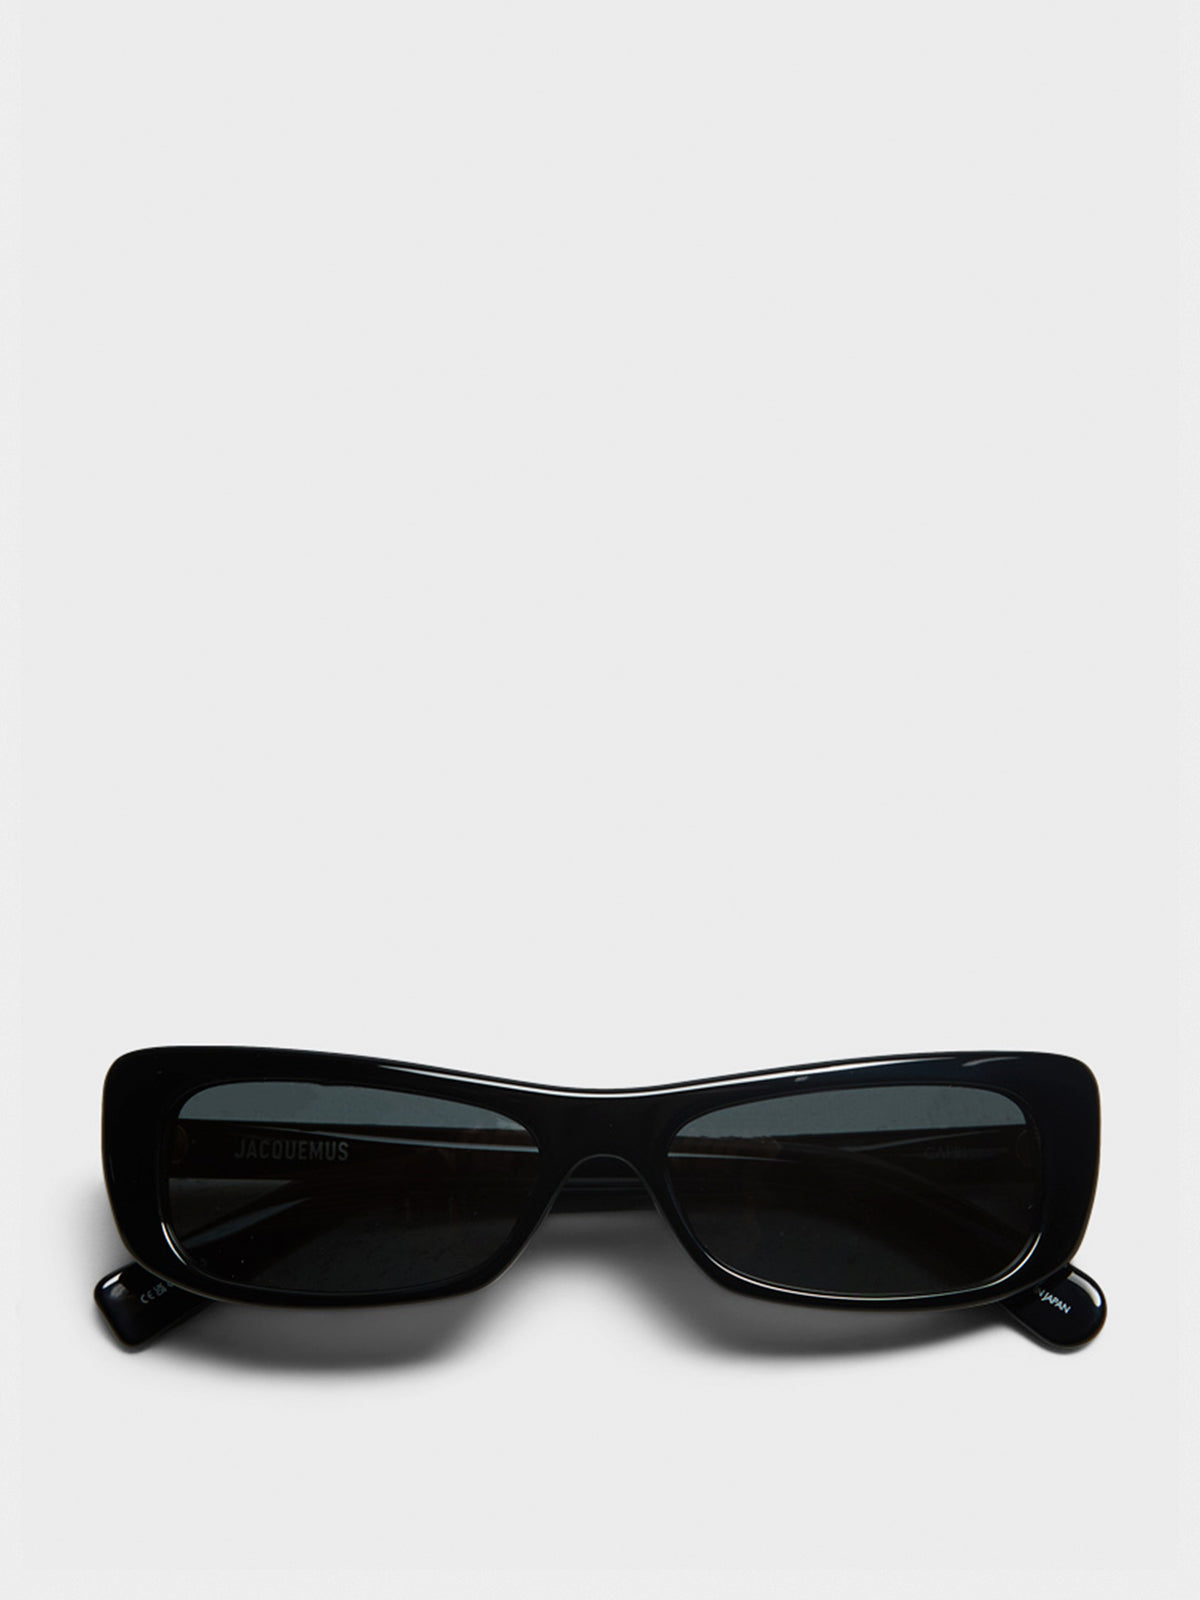 Capri Sunglasses in Black, Yellow Gold and Grey